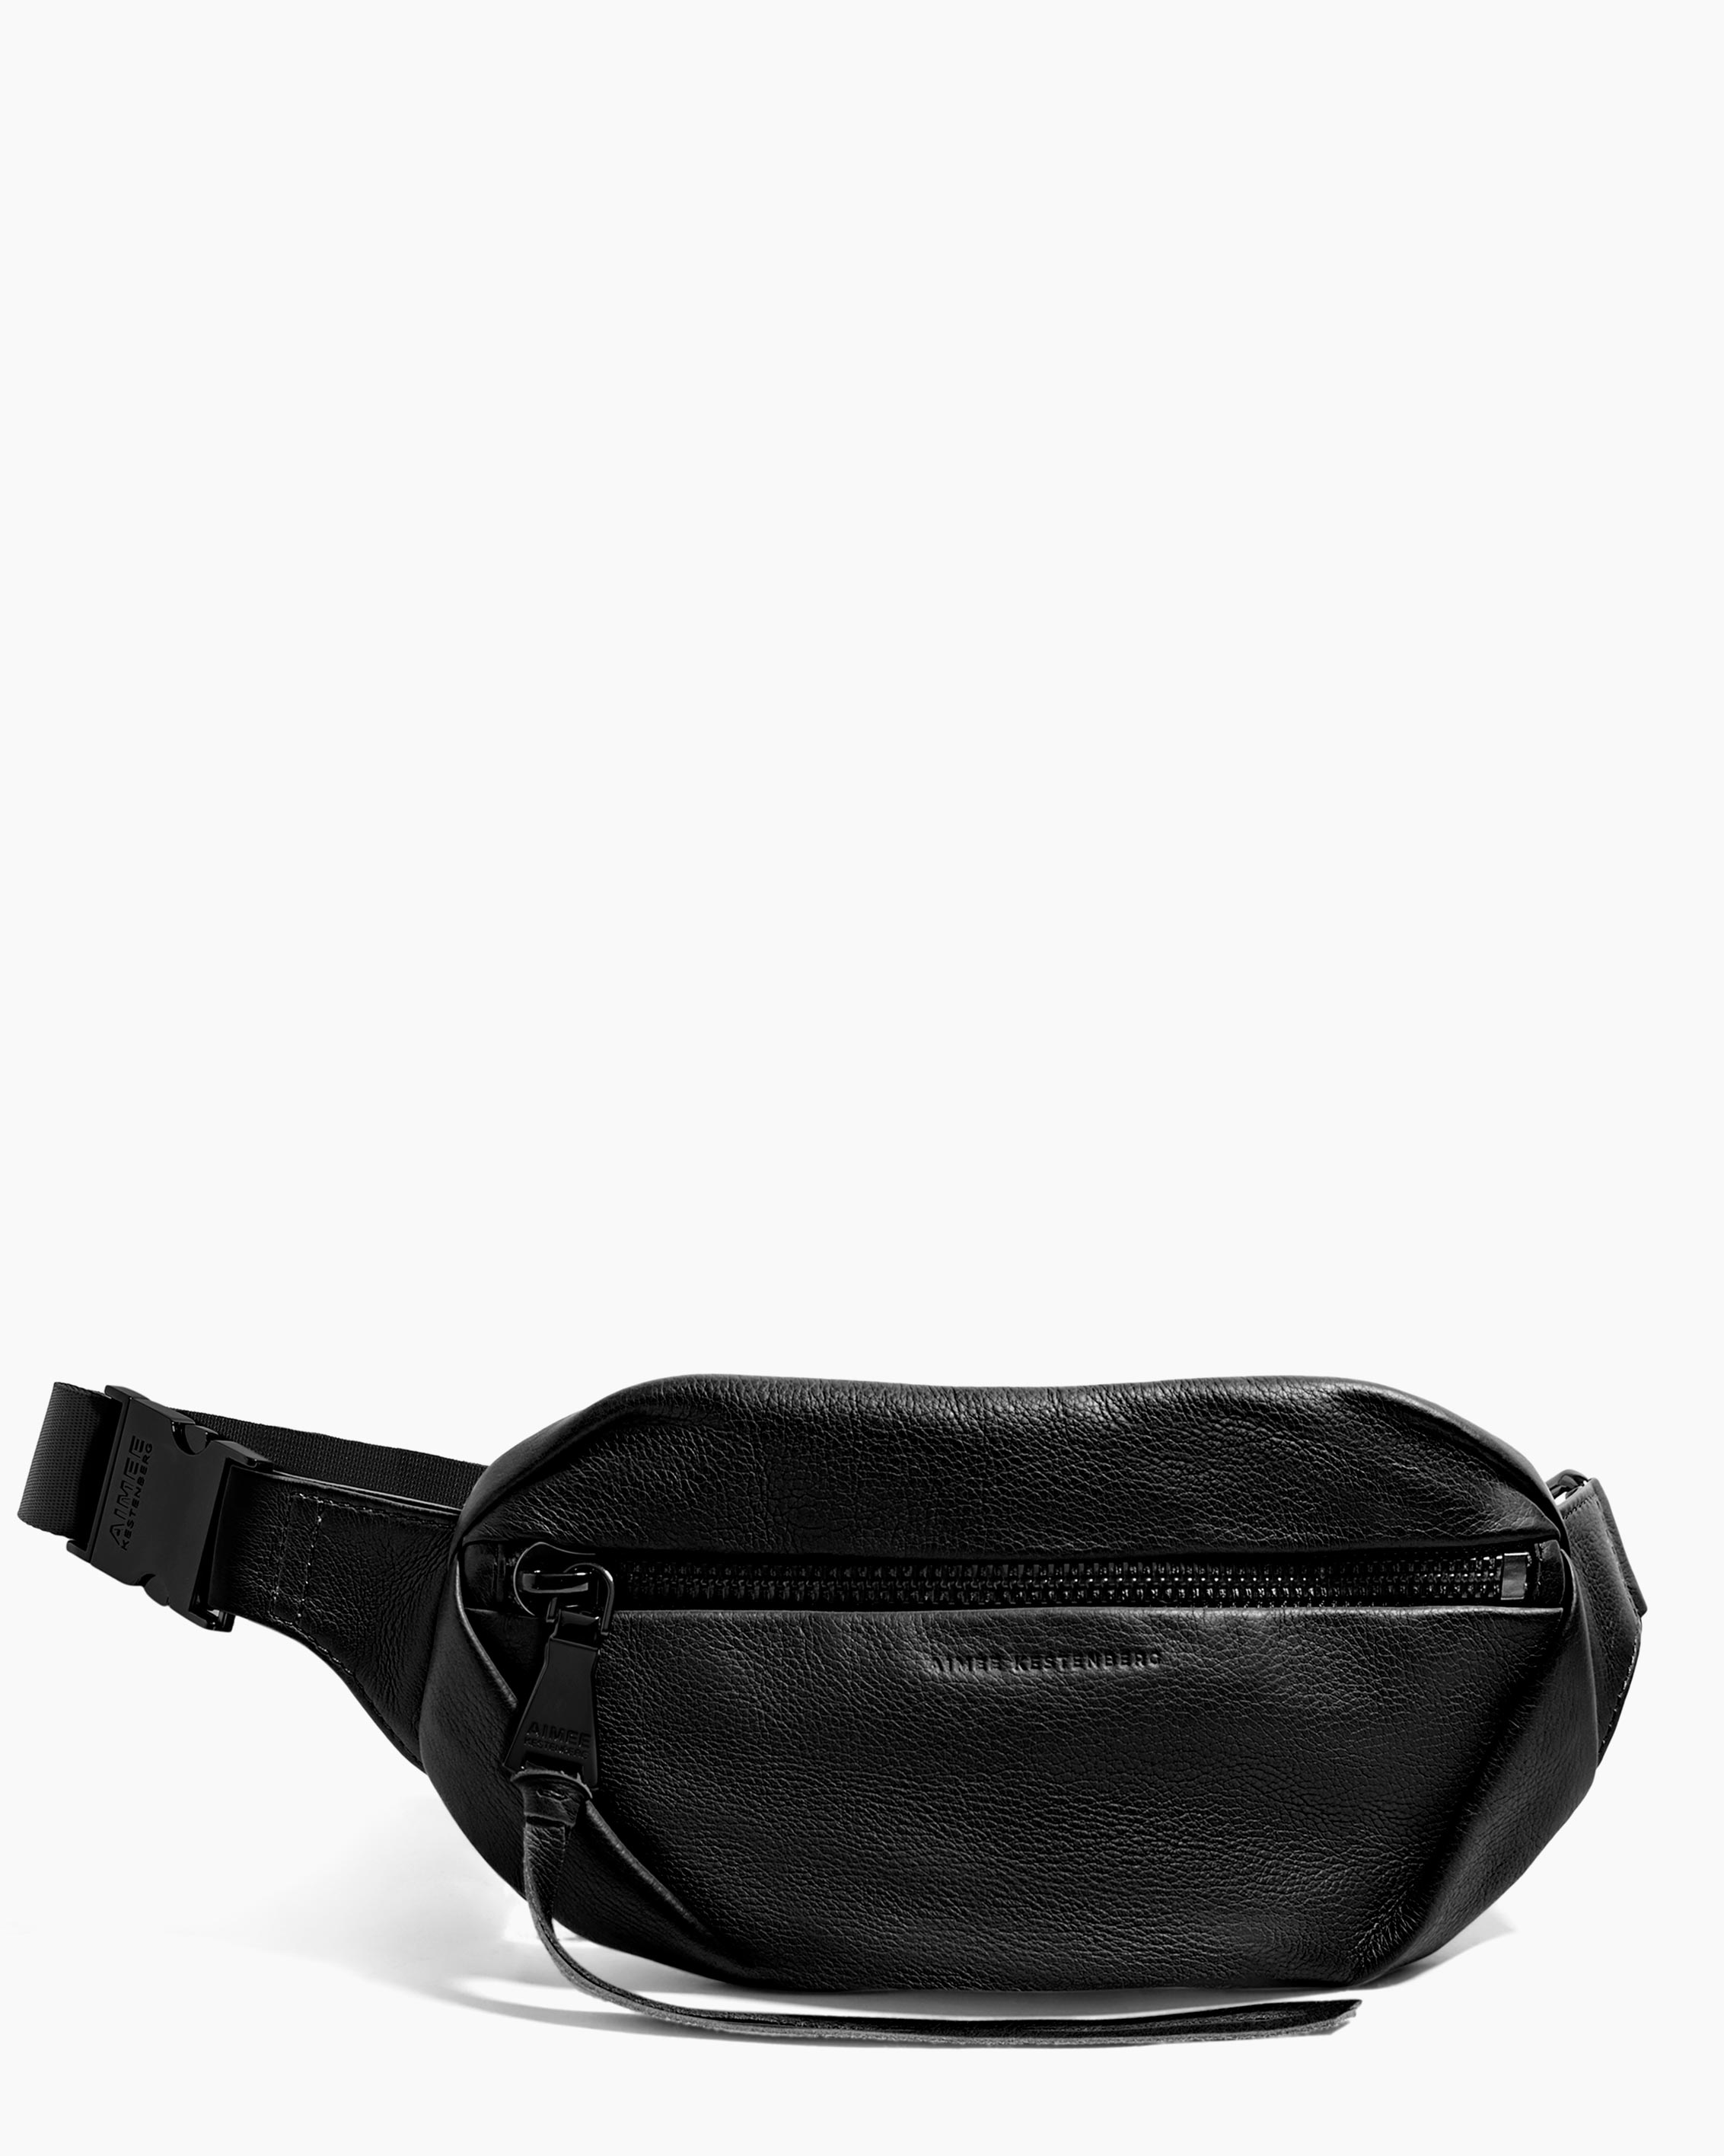 Women’s Bags & Leather Handbags | Aimee Kestenberg